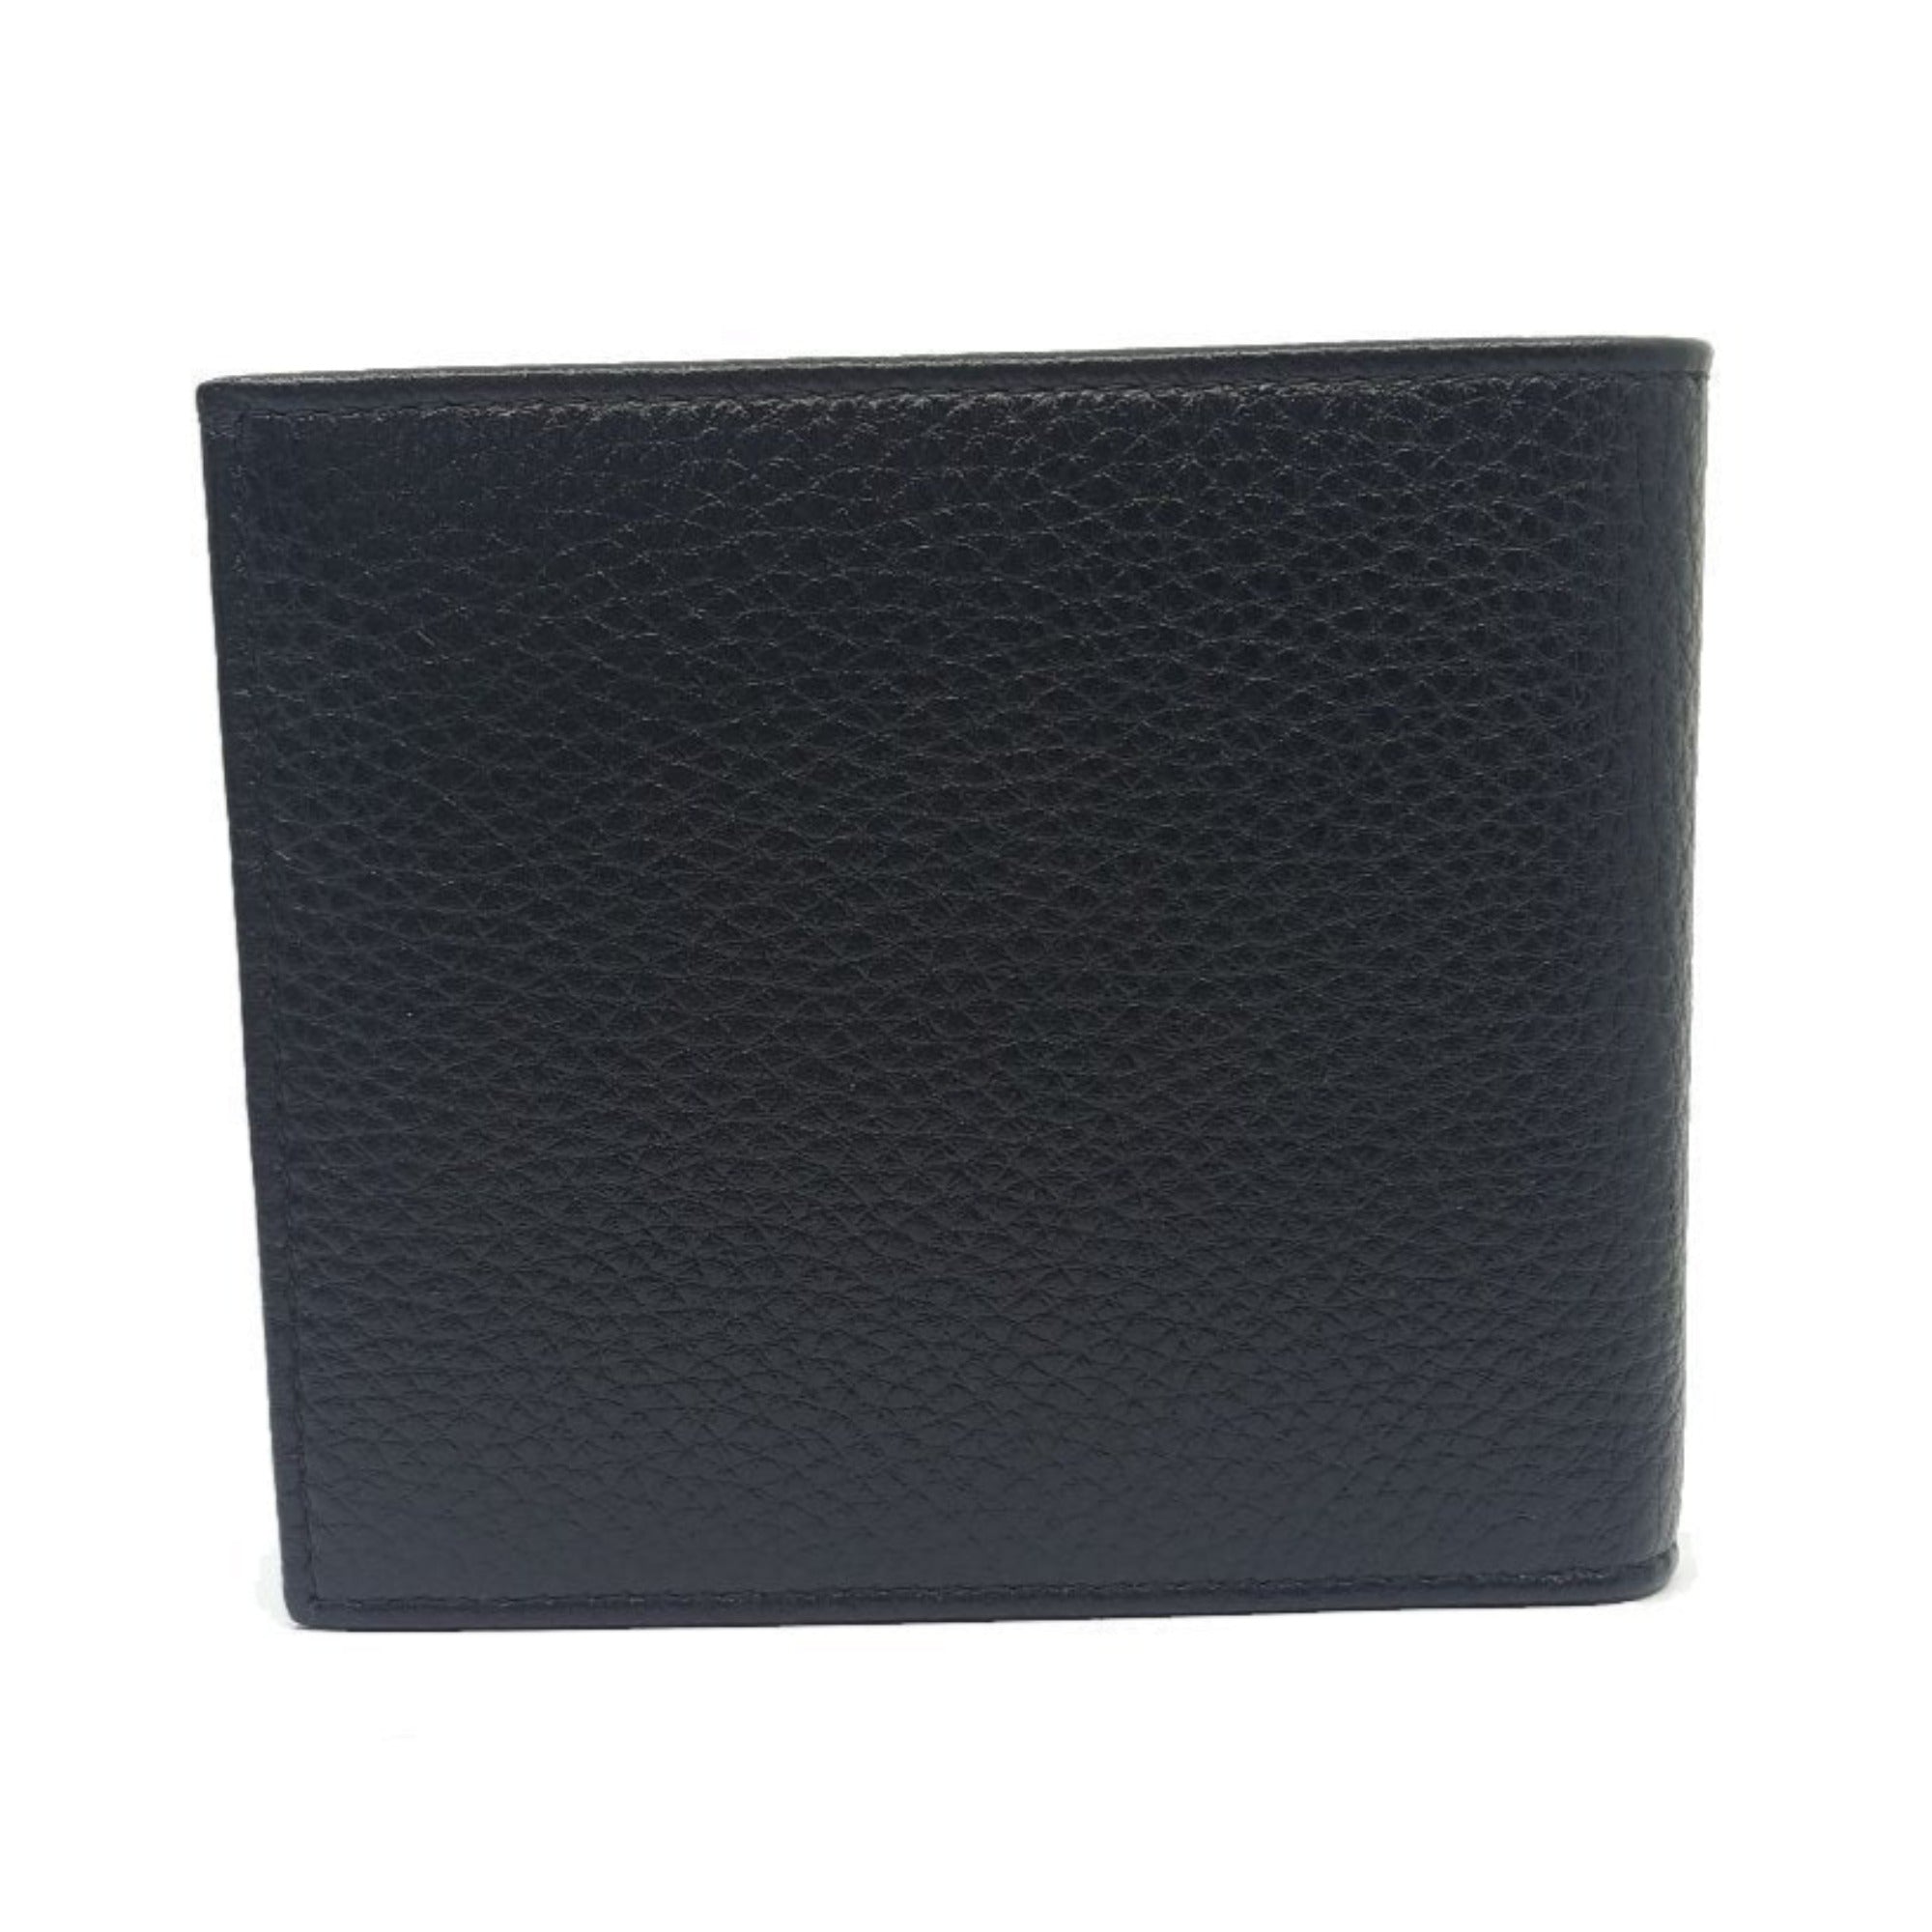 Prada Portaf. Orizzontale Nero Black Vitello Grain Leather Wallet ...